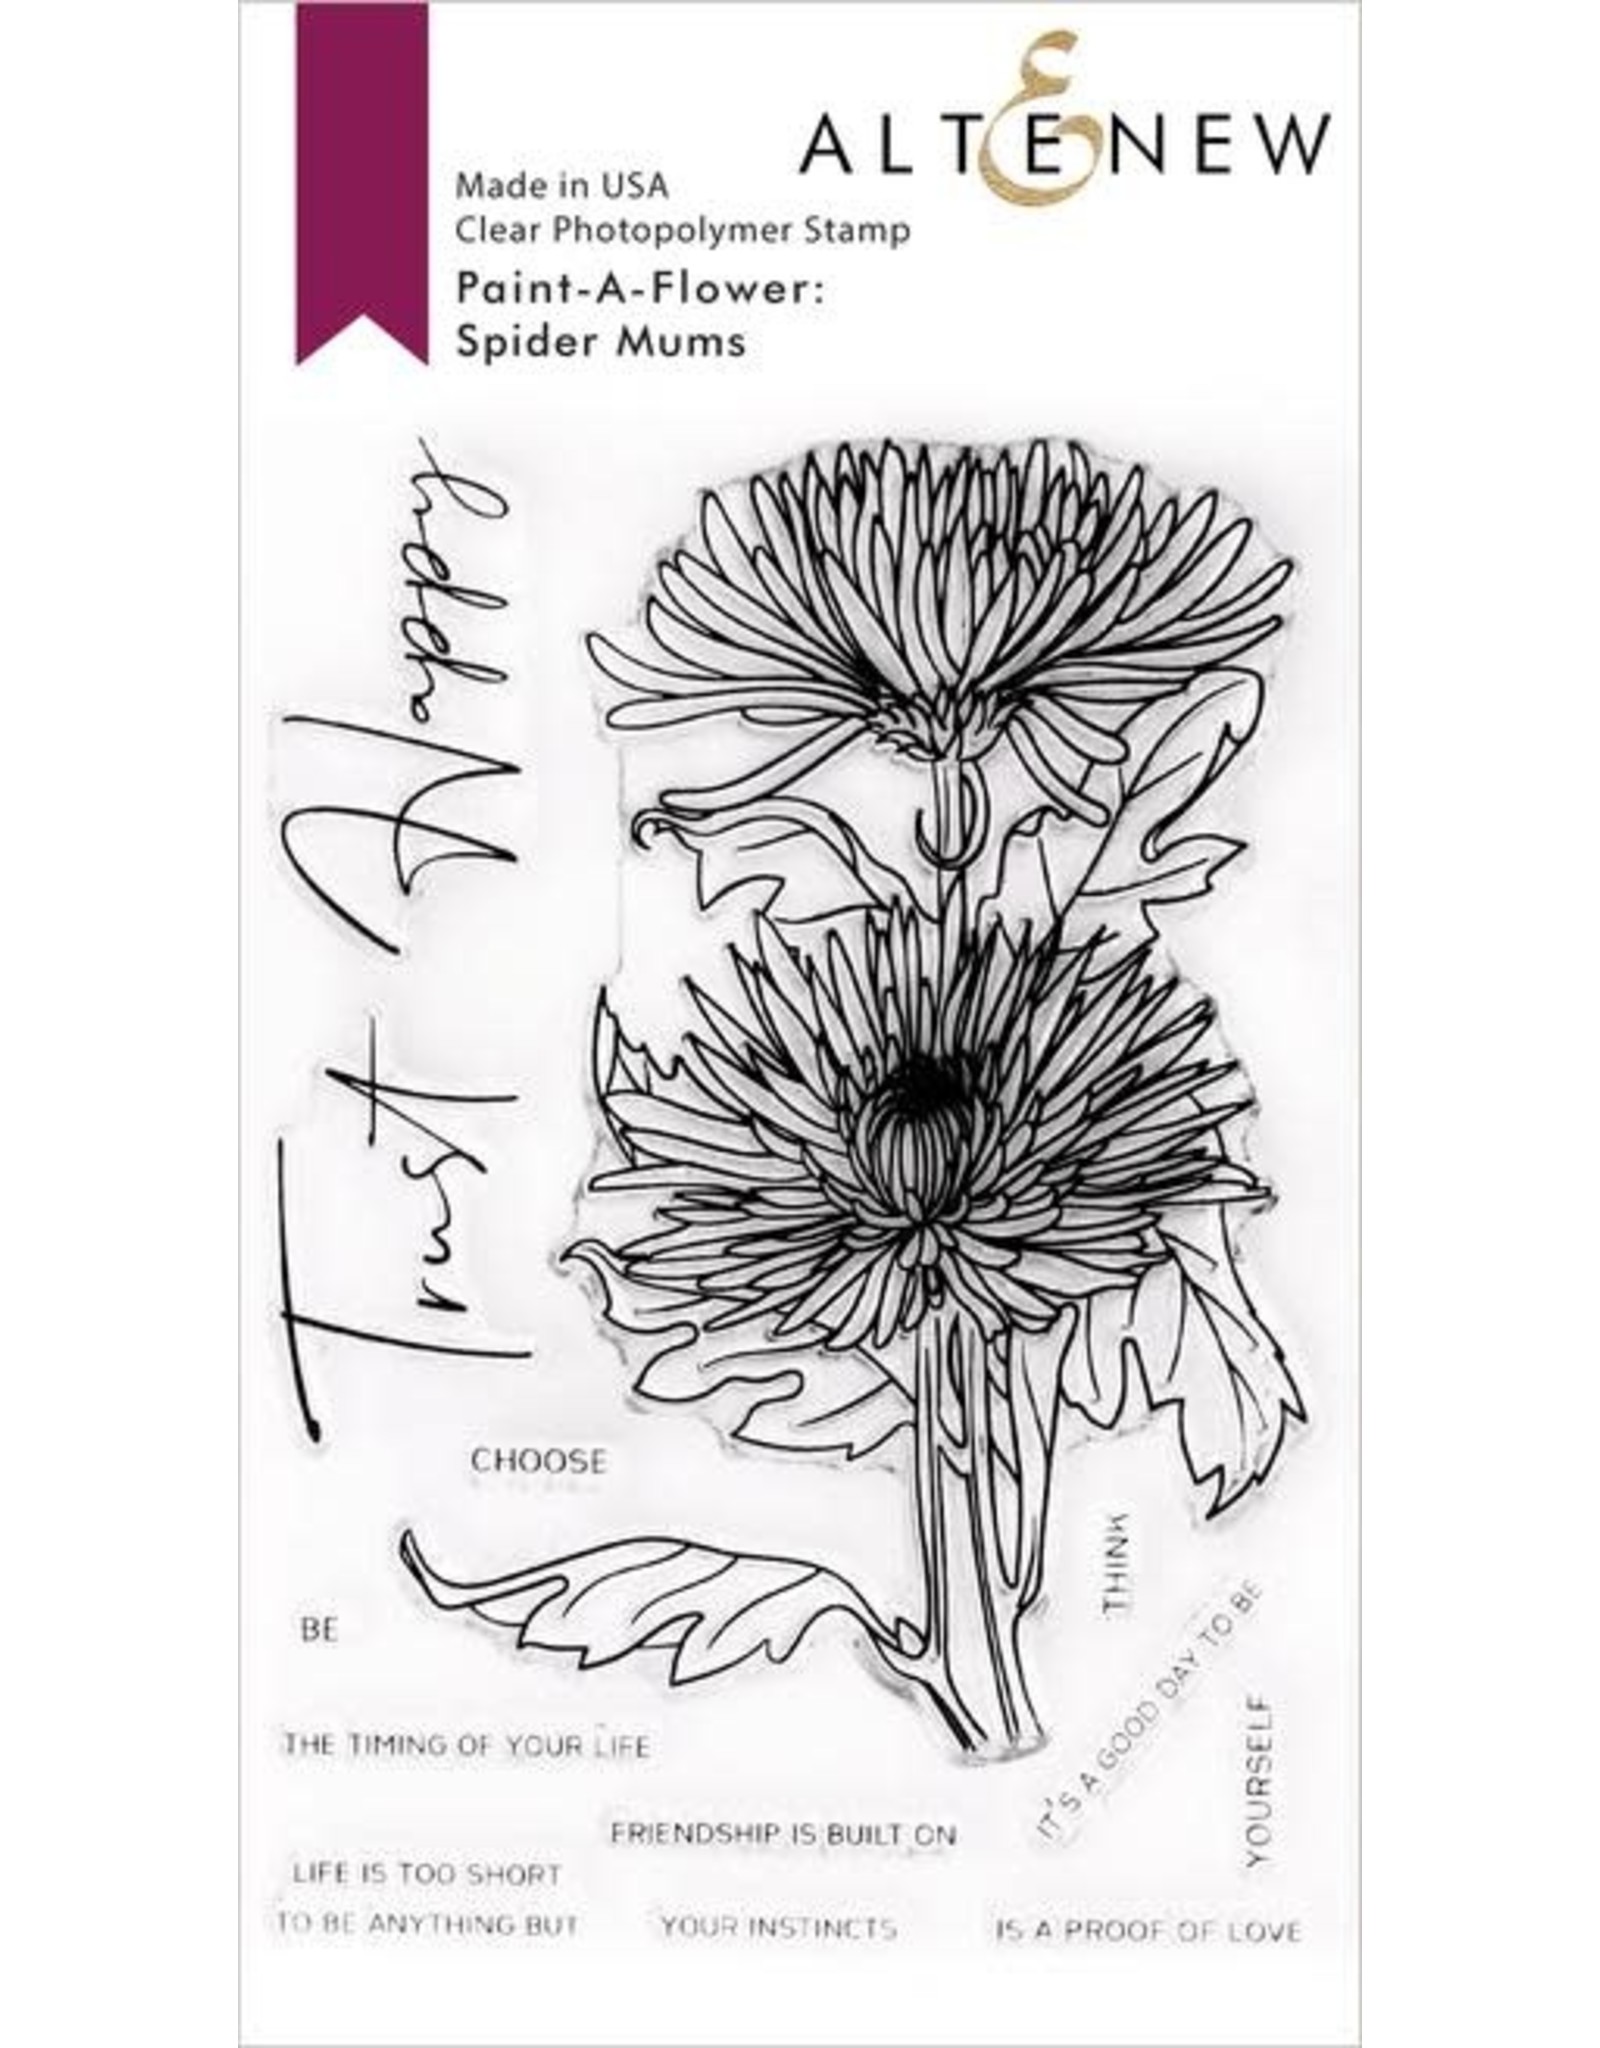 ALTENEW Paint-A-Flower: Spider Mums Outline Stamp Set